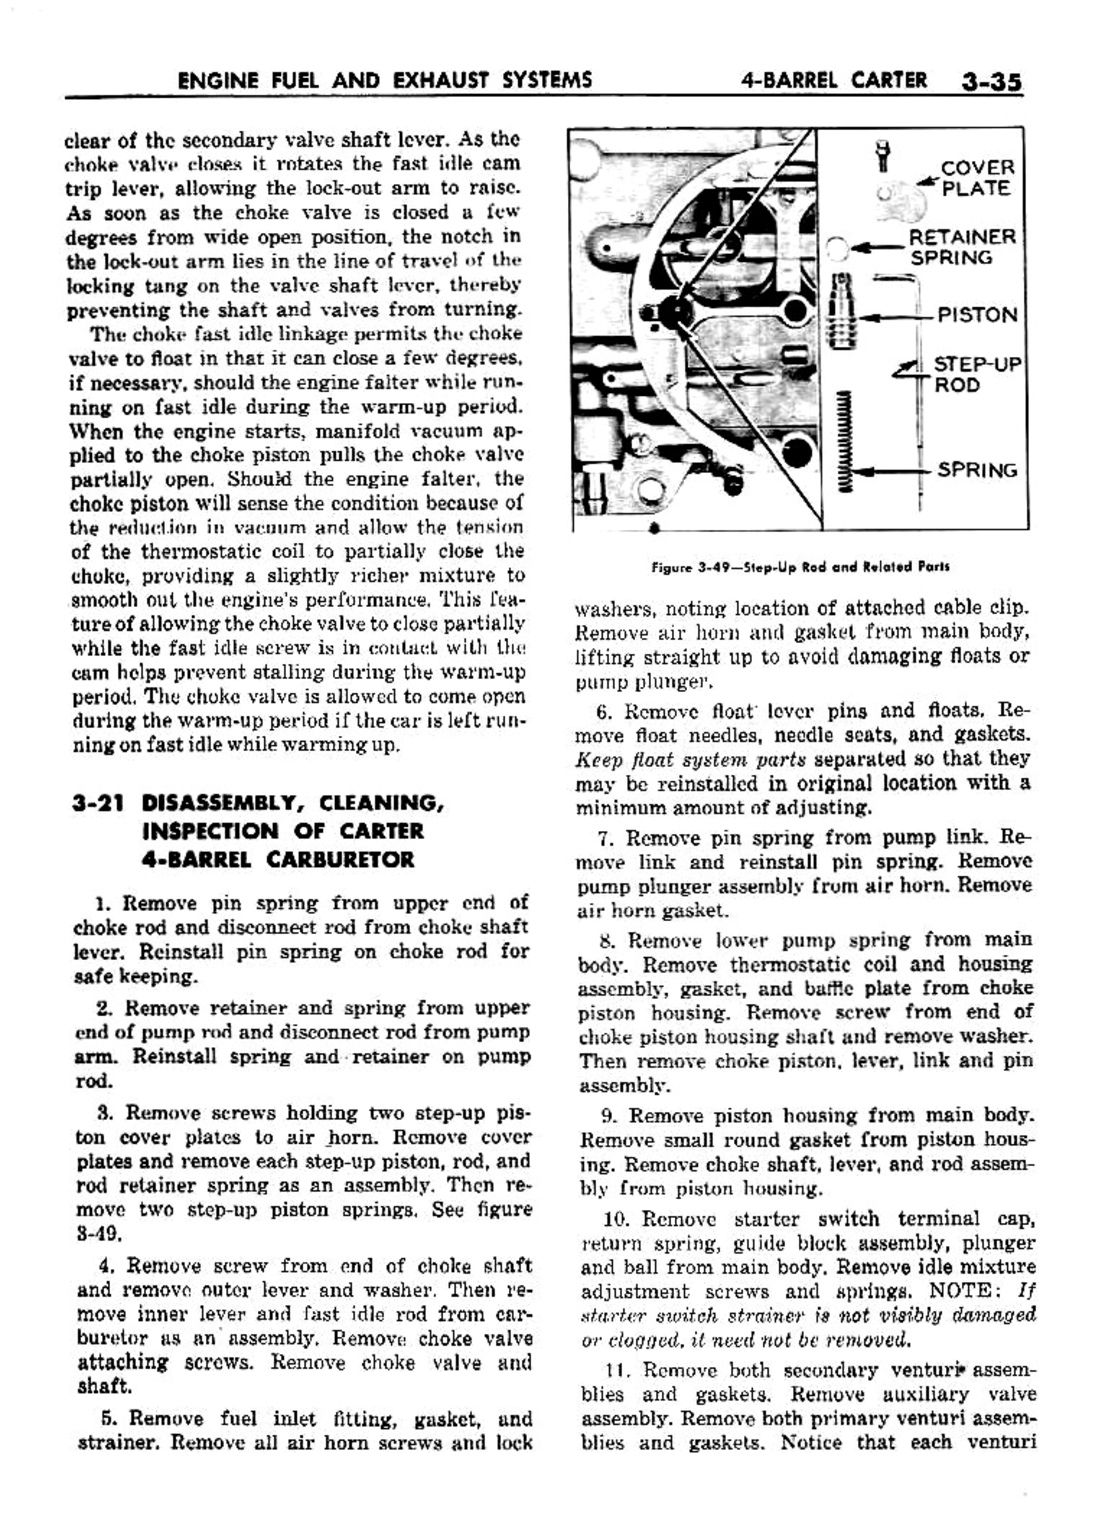 n_04 1959 Buick Shop Manual - Engine Fuel & Exhaust-035-035.jpg